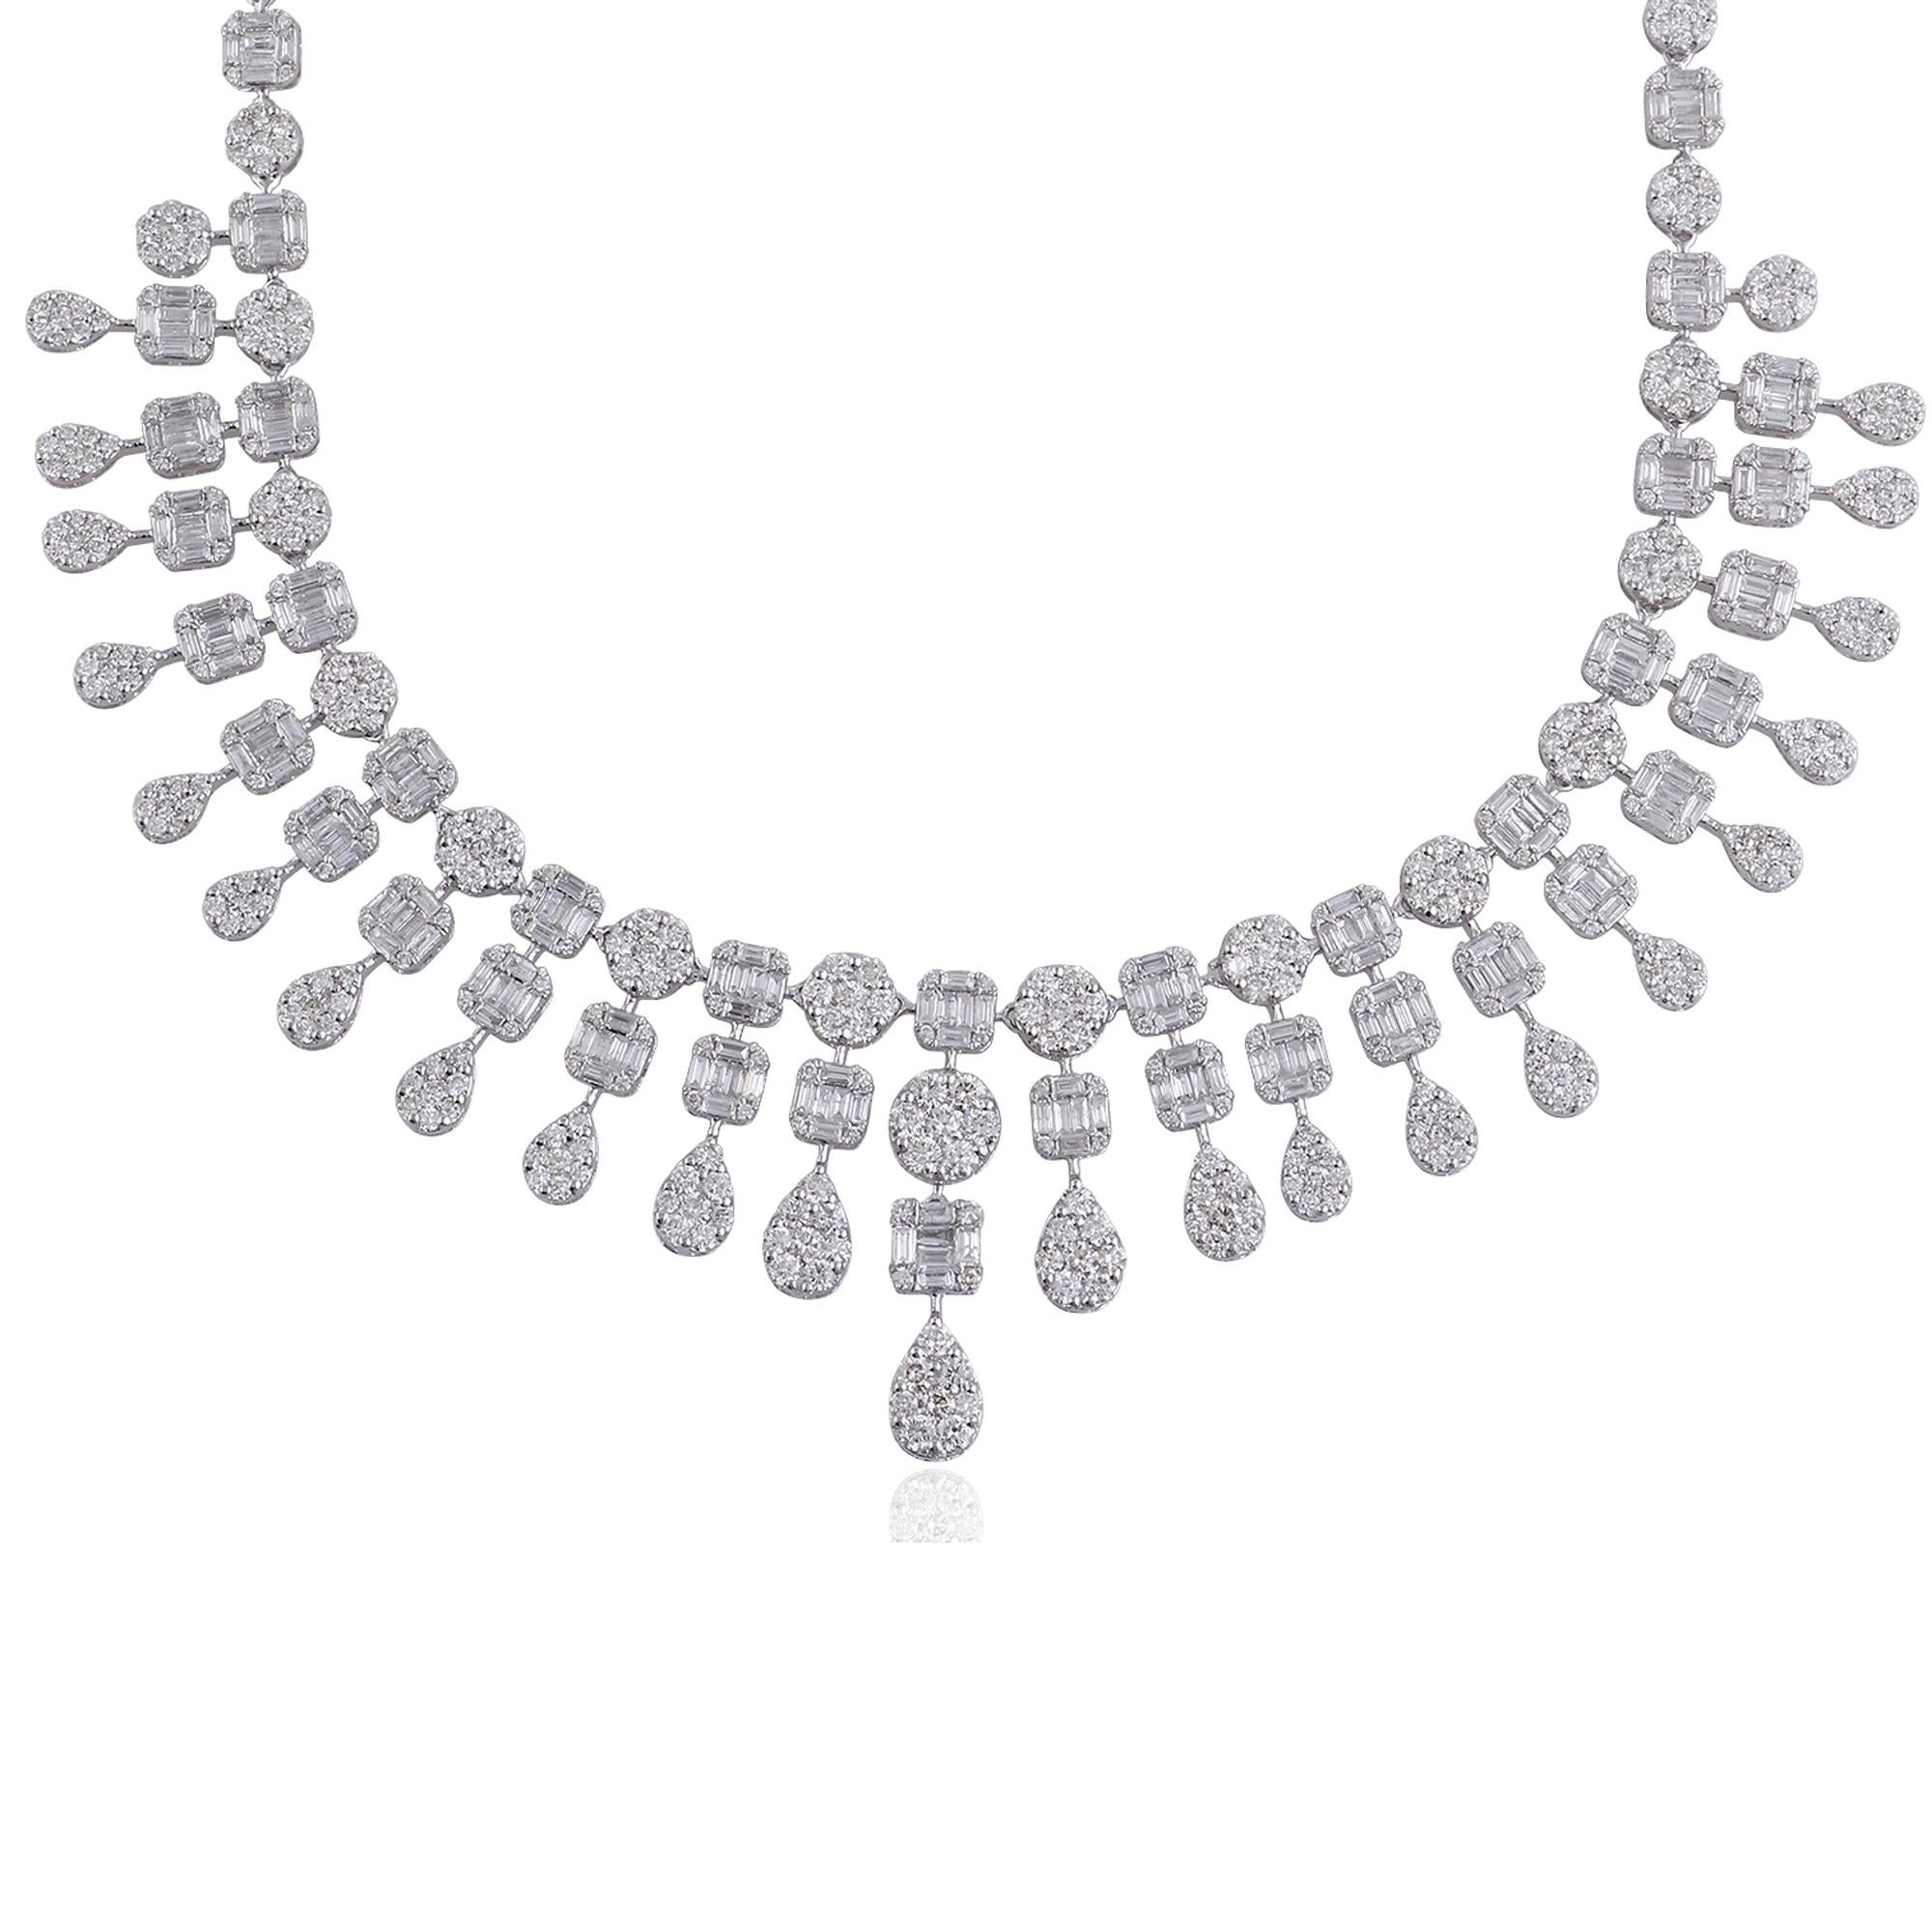 Baguette Cut Certified 15.20 Carat Baguette Diamond Choker Necklace 18k White Gold Jewelry For Sale